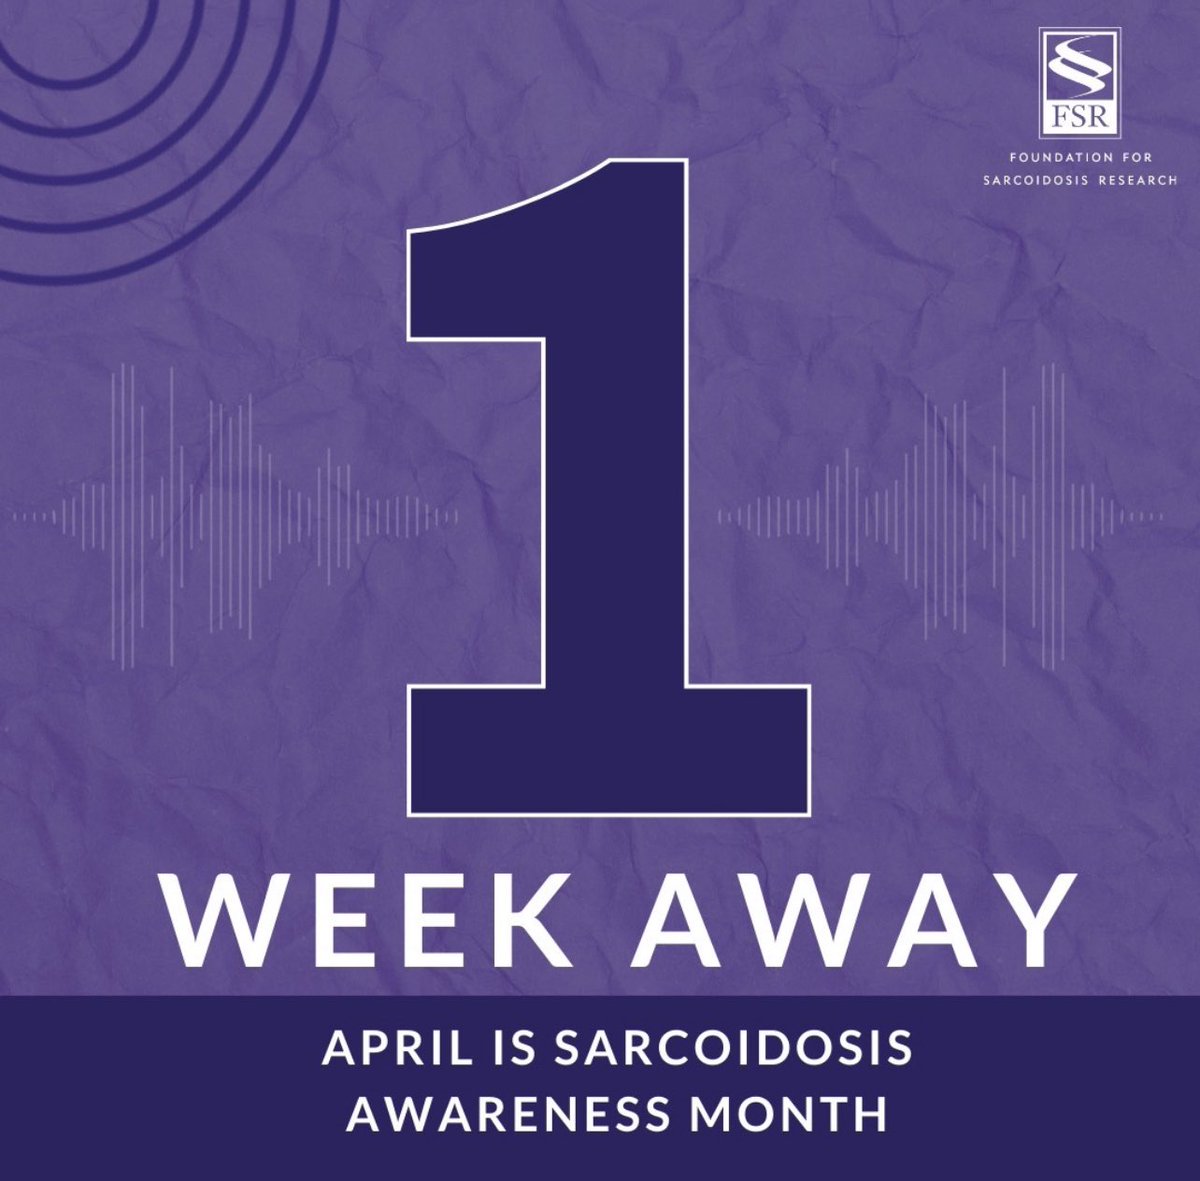 Sarcoidosis Awareness Month begins in one week!! #awareness #findacure #saysarcoidosis @StopSarcoidosis